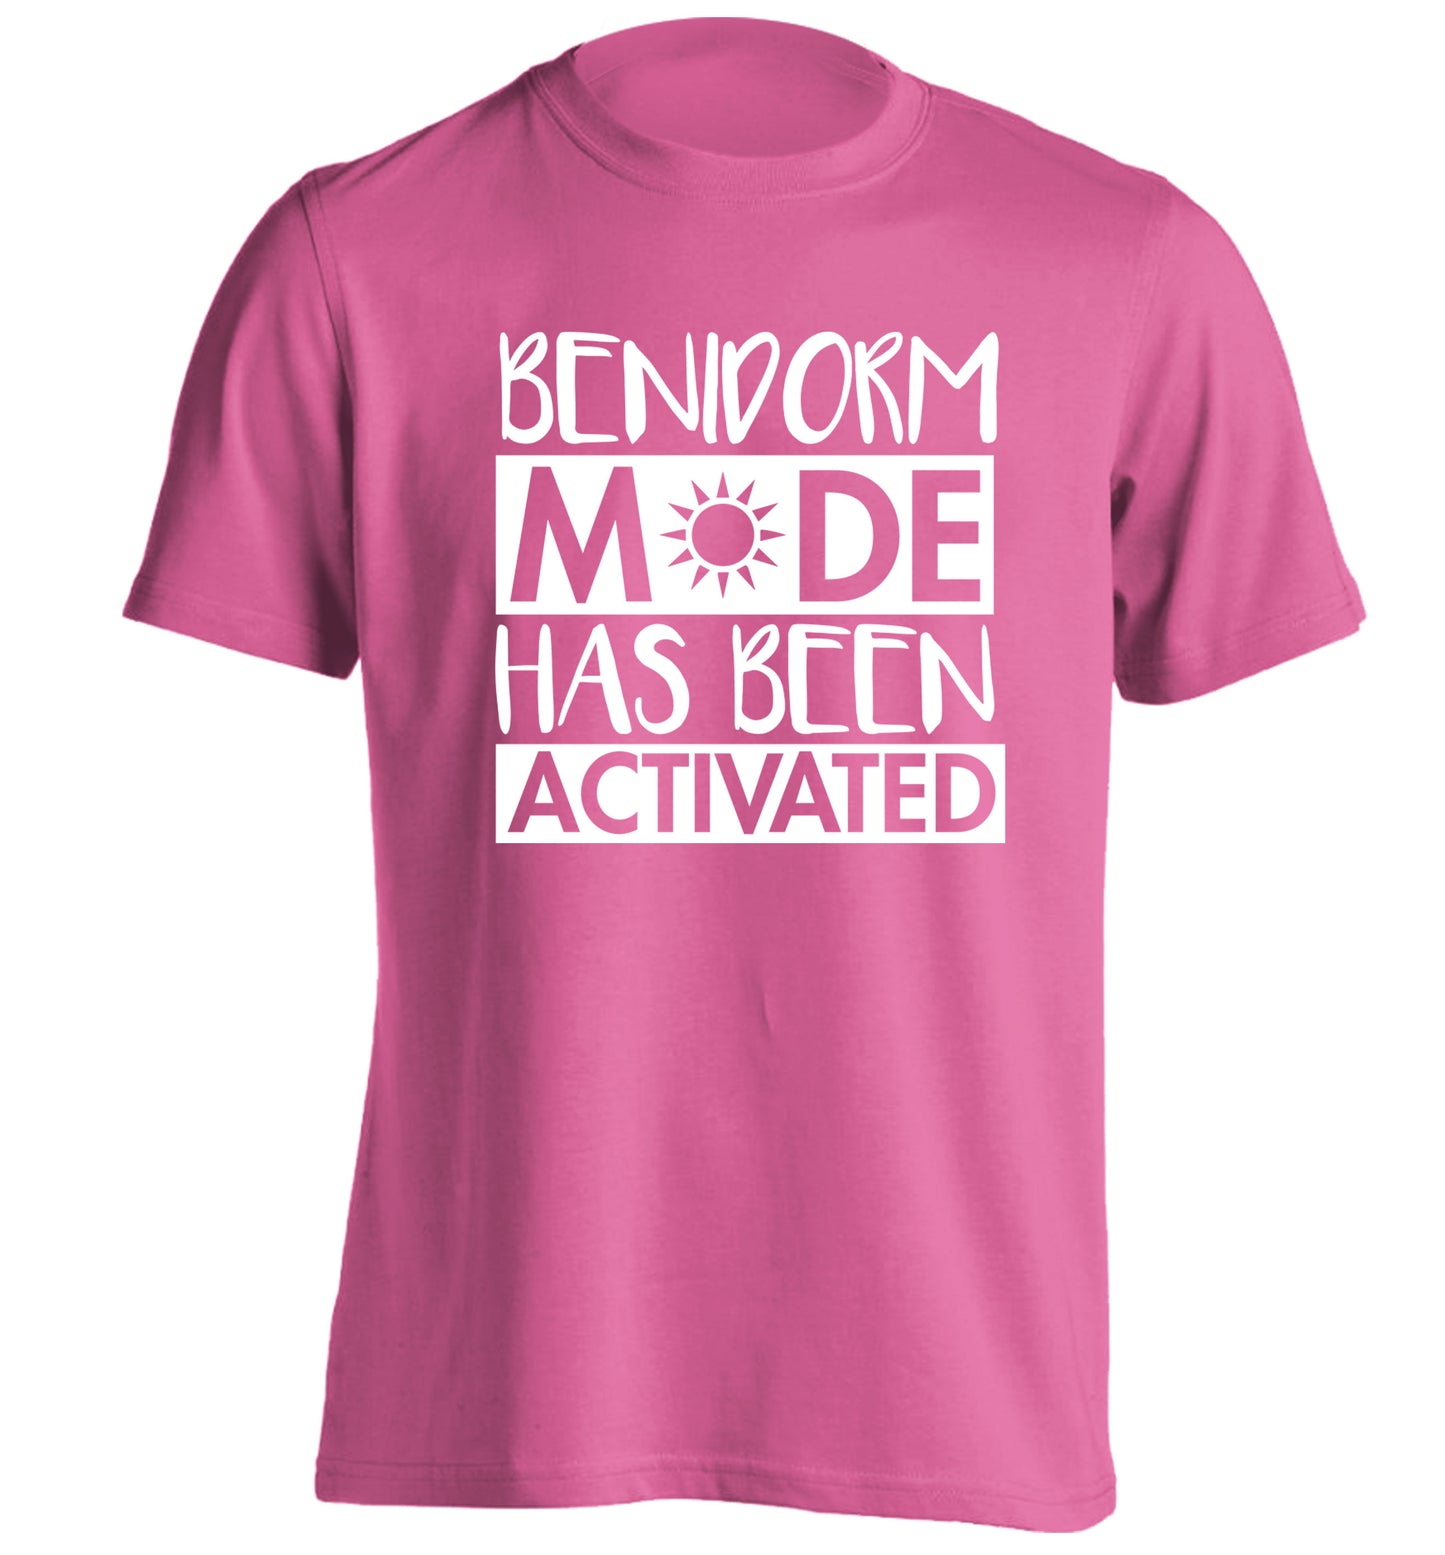 Benidorm mode has been activated adults unisex pink Tshirt 2XL